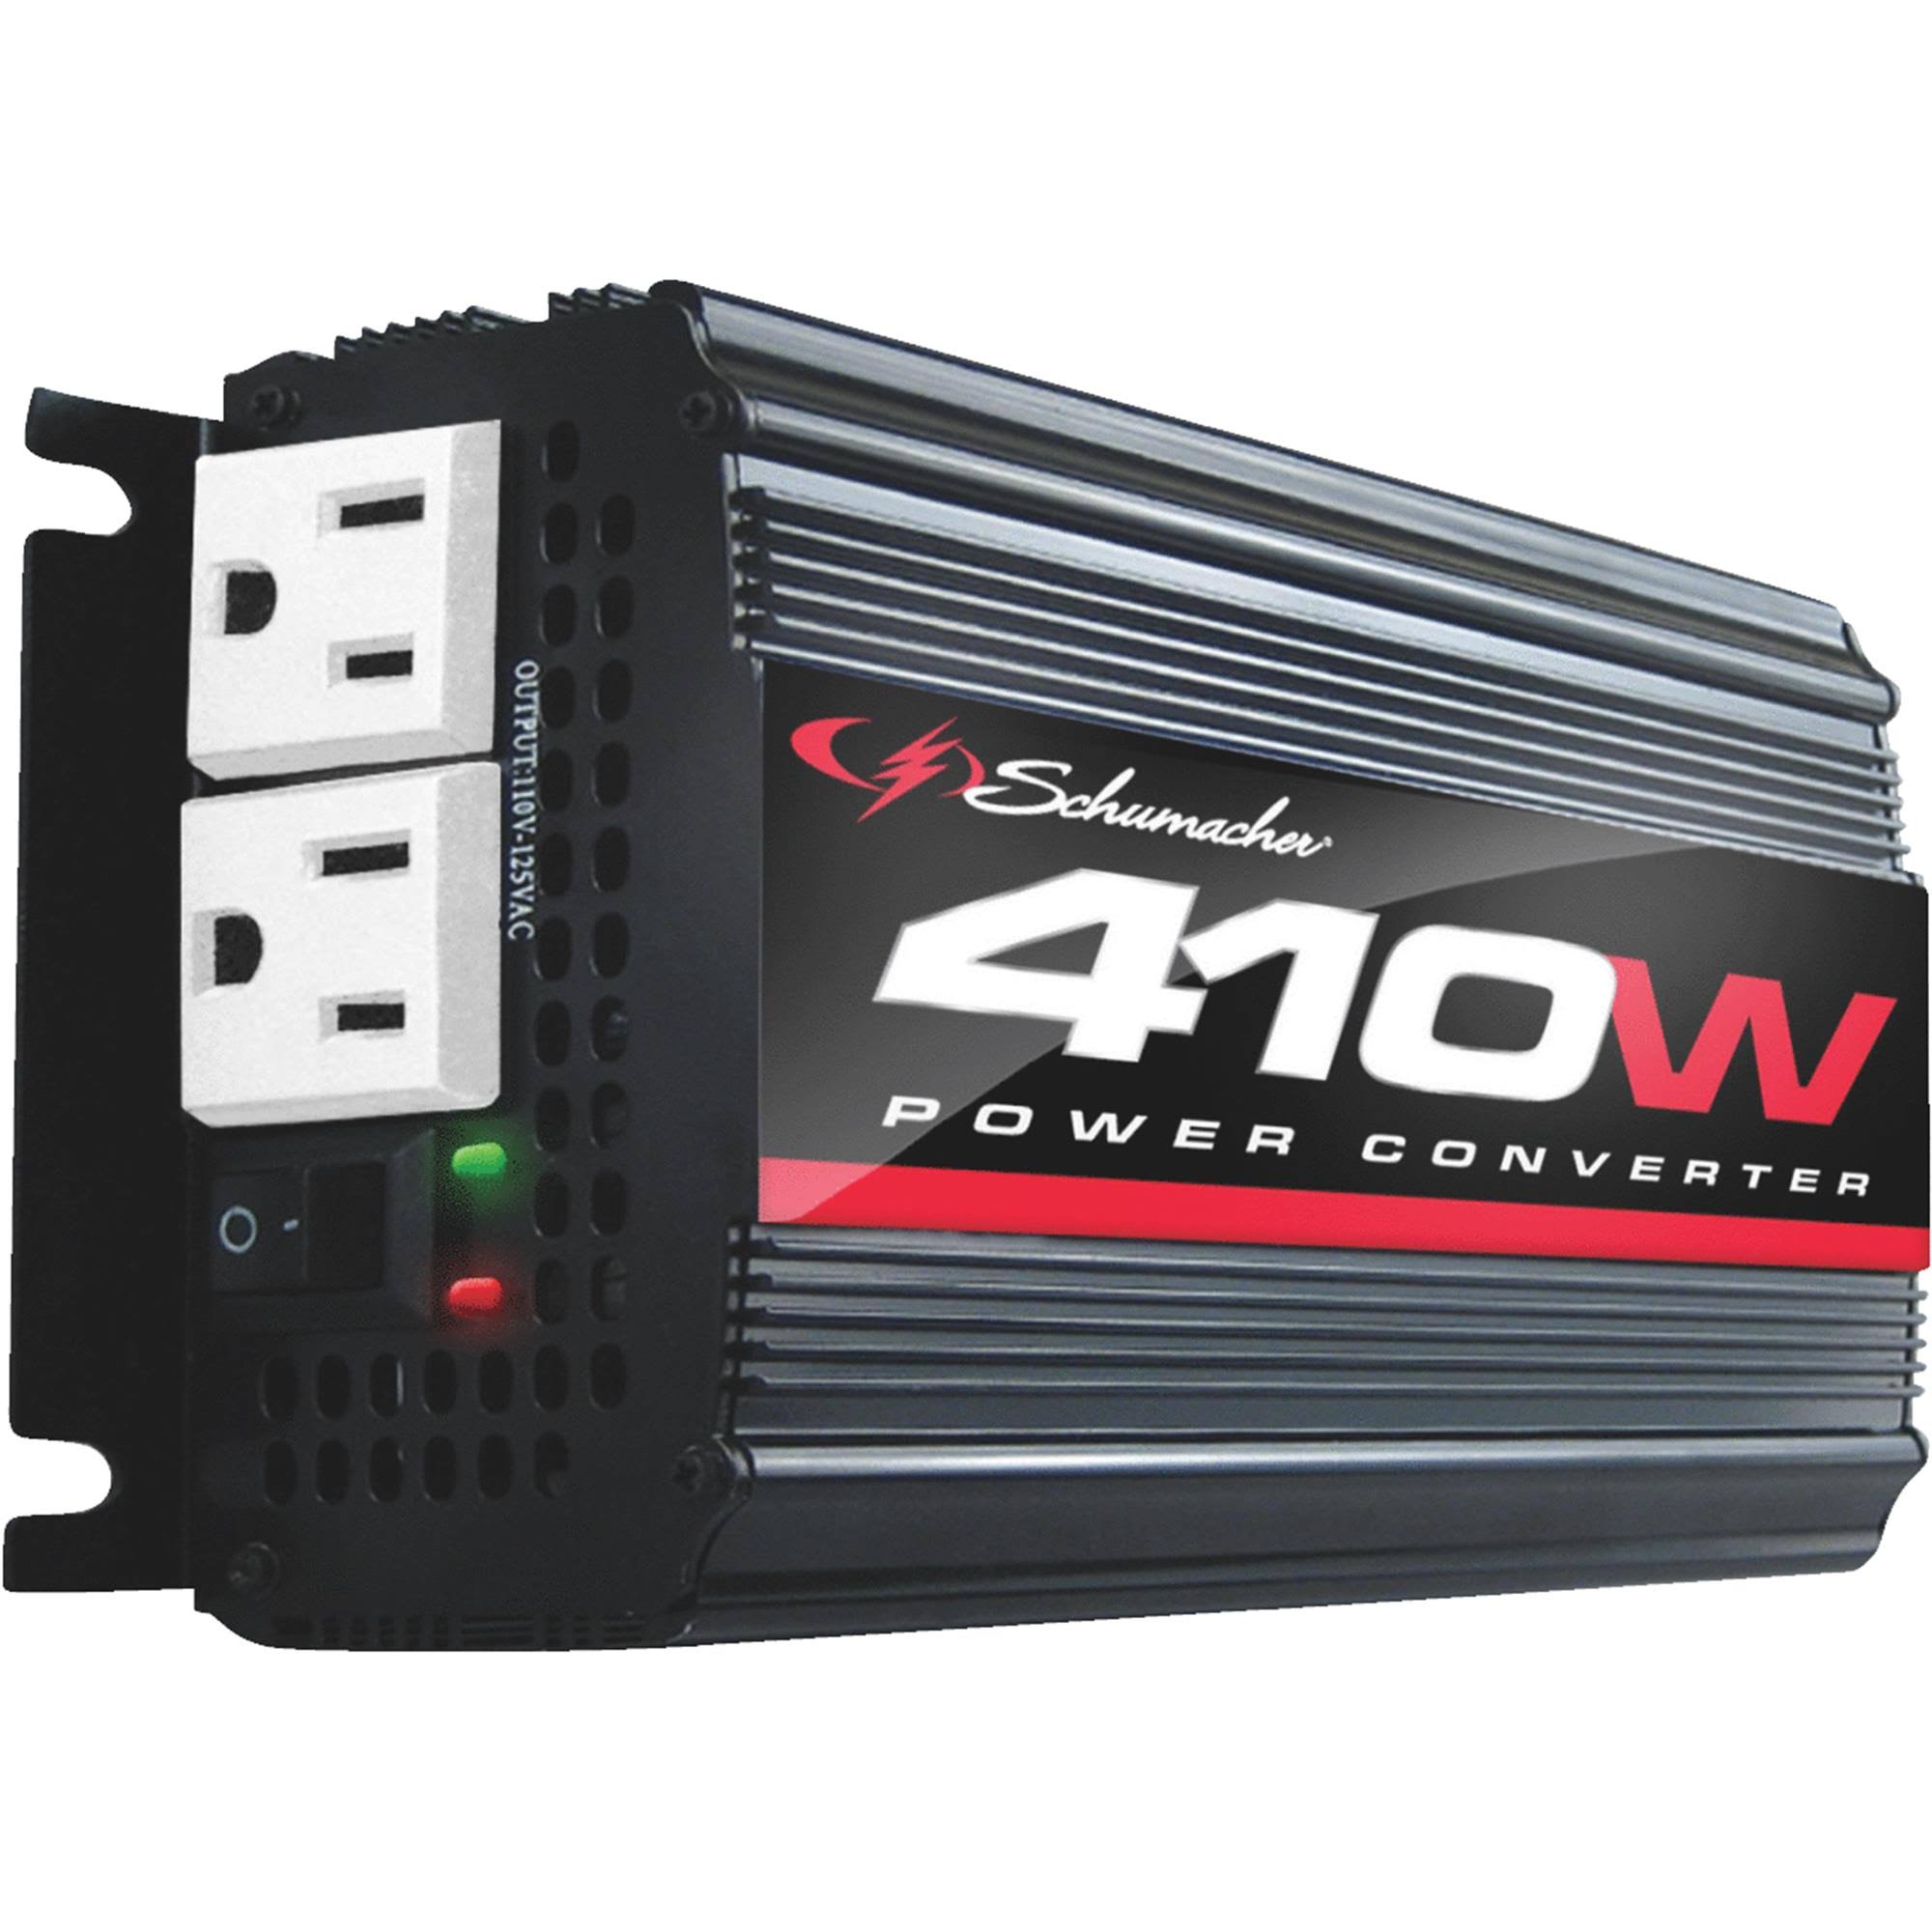 Schumacher Xi41b Electric Power Inverter - 410W